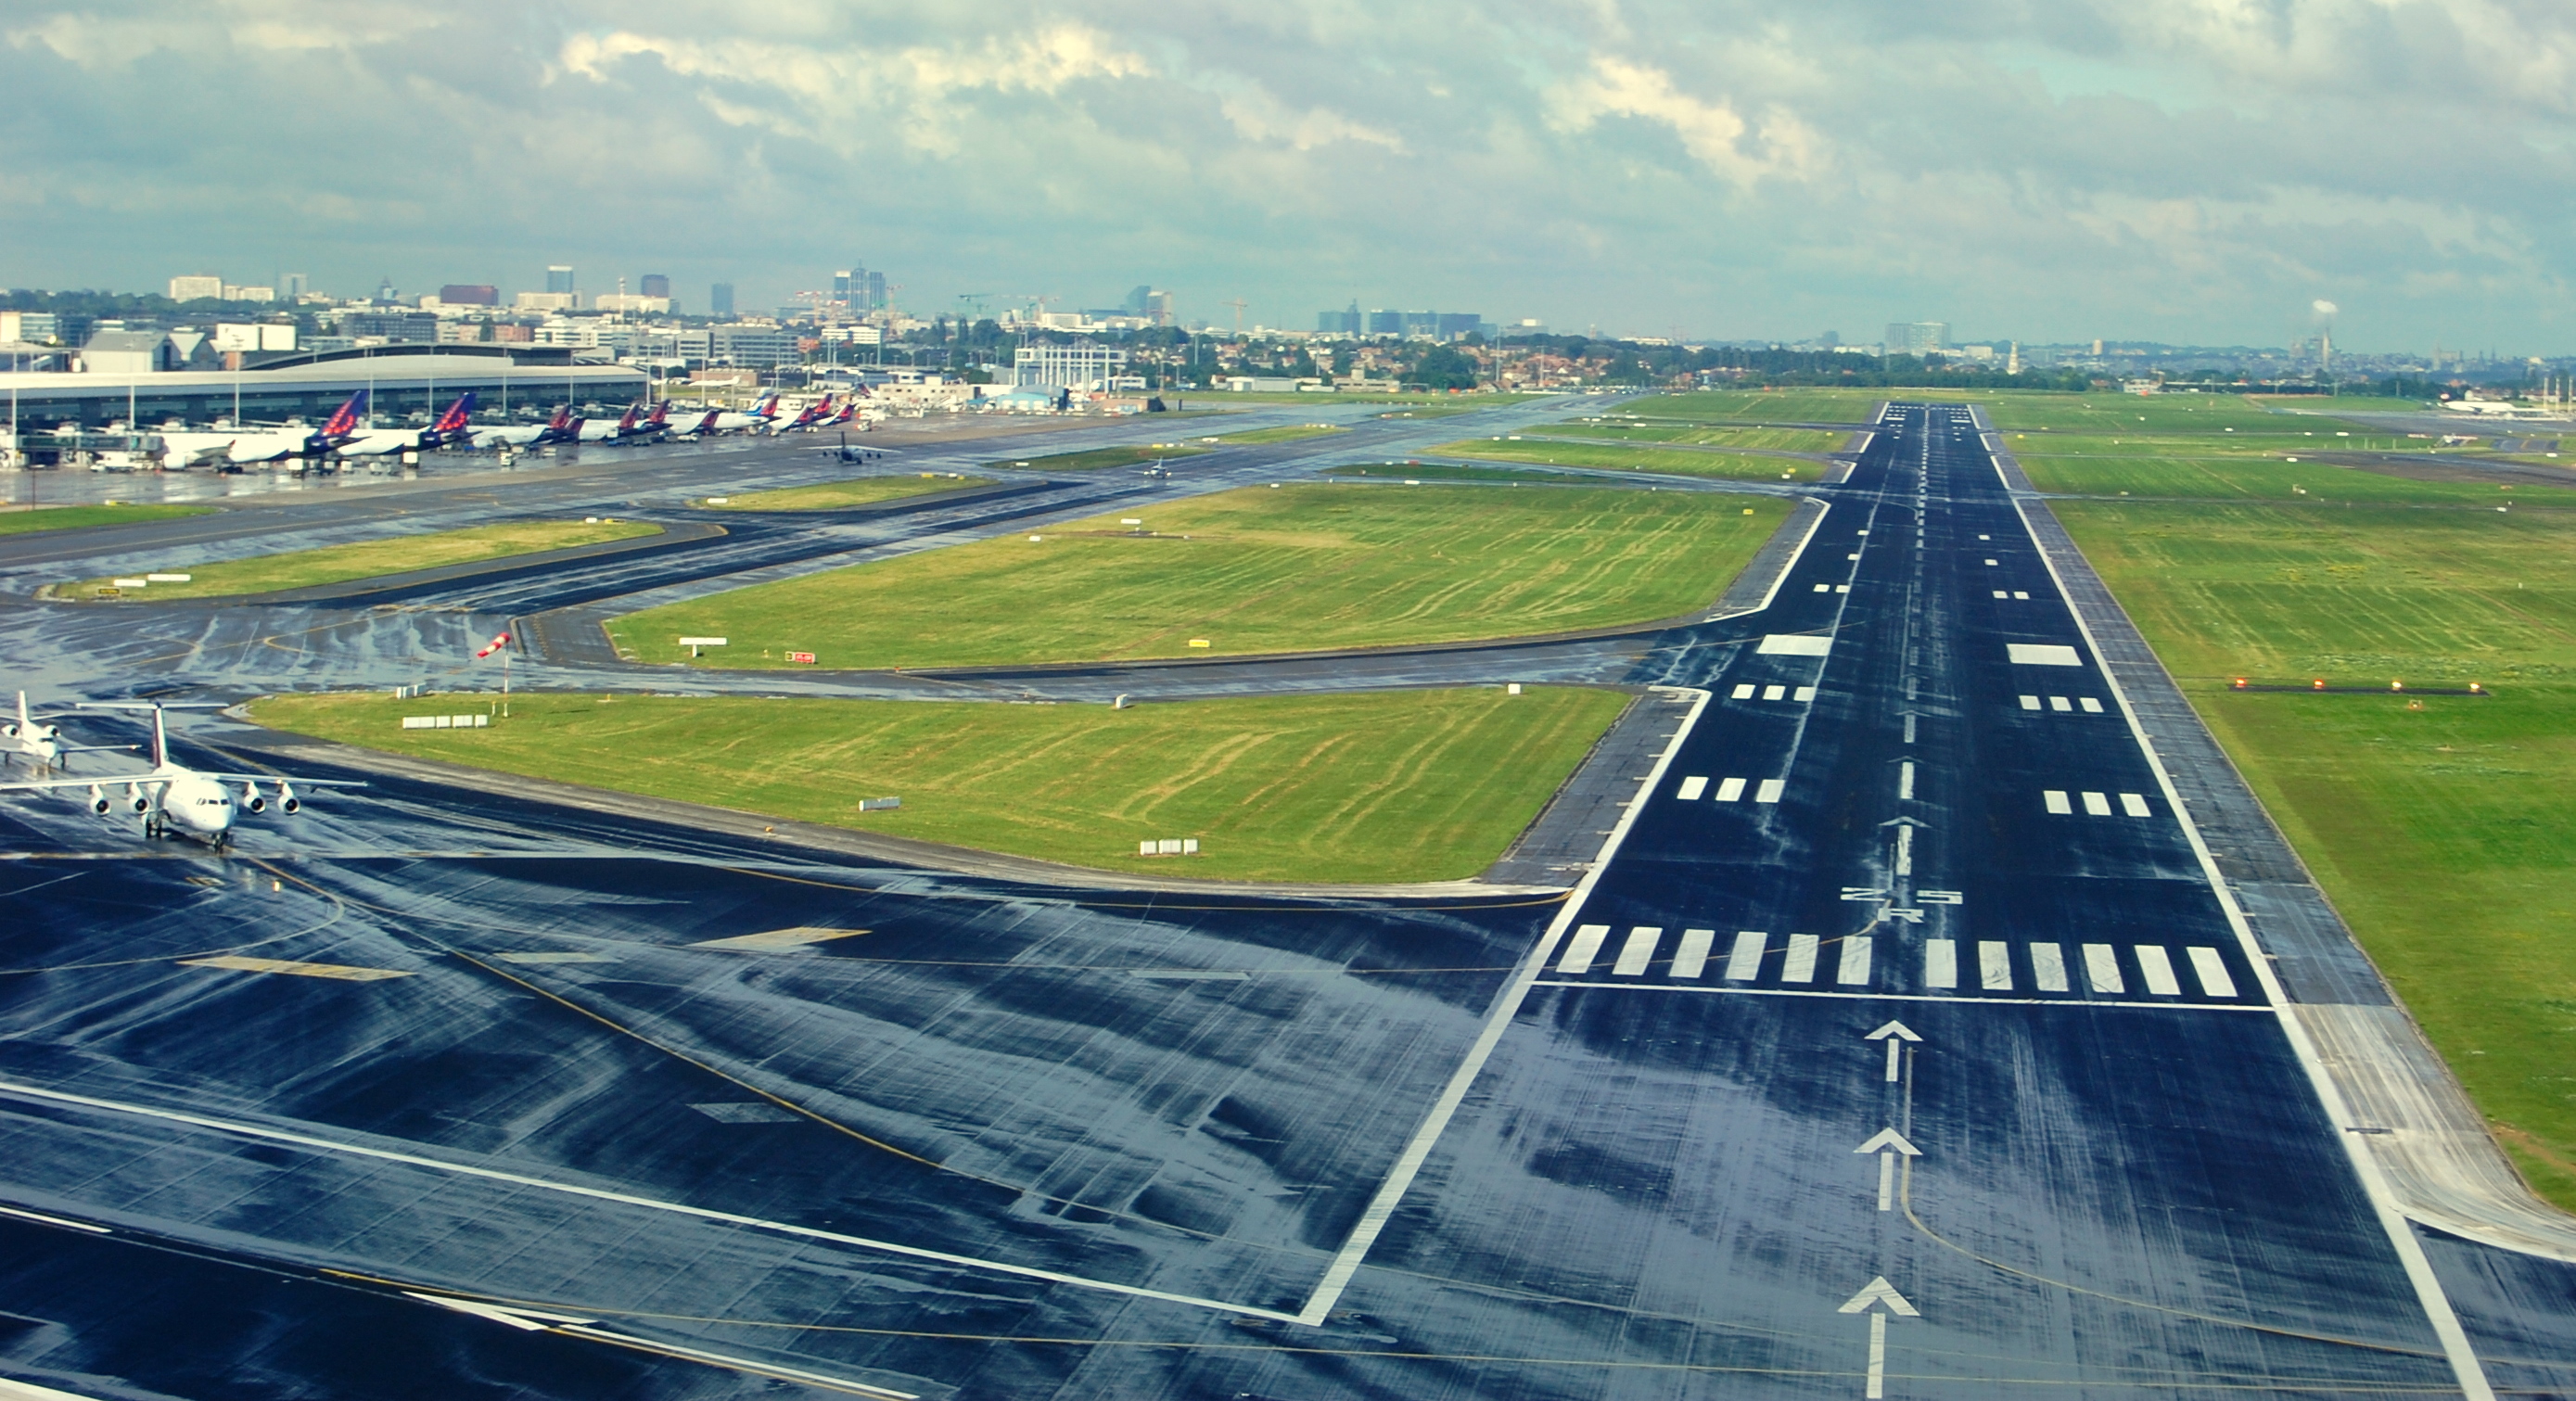 File:Brussels Airport Runway 25 R.jpg - Wikimedia Commons